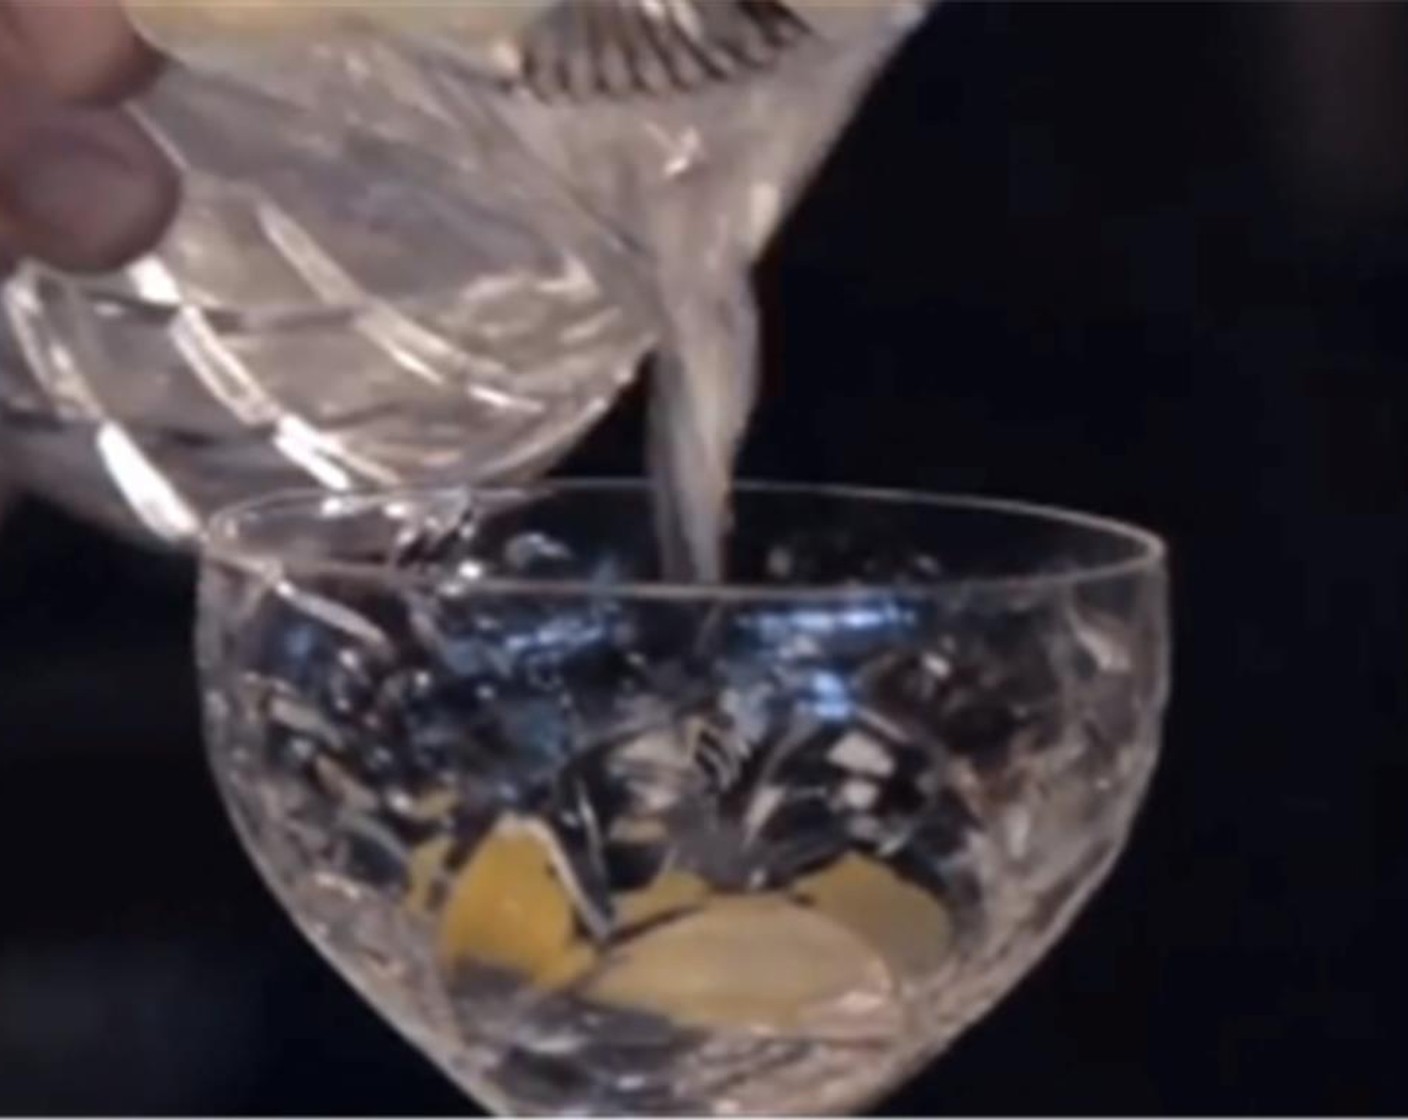 step 3 Strain cocktail into the glass then remove the lemon zest slice. Enjoy!